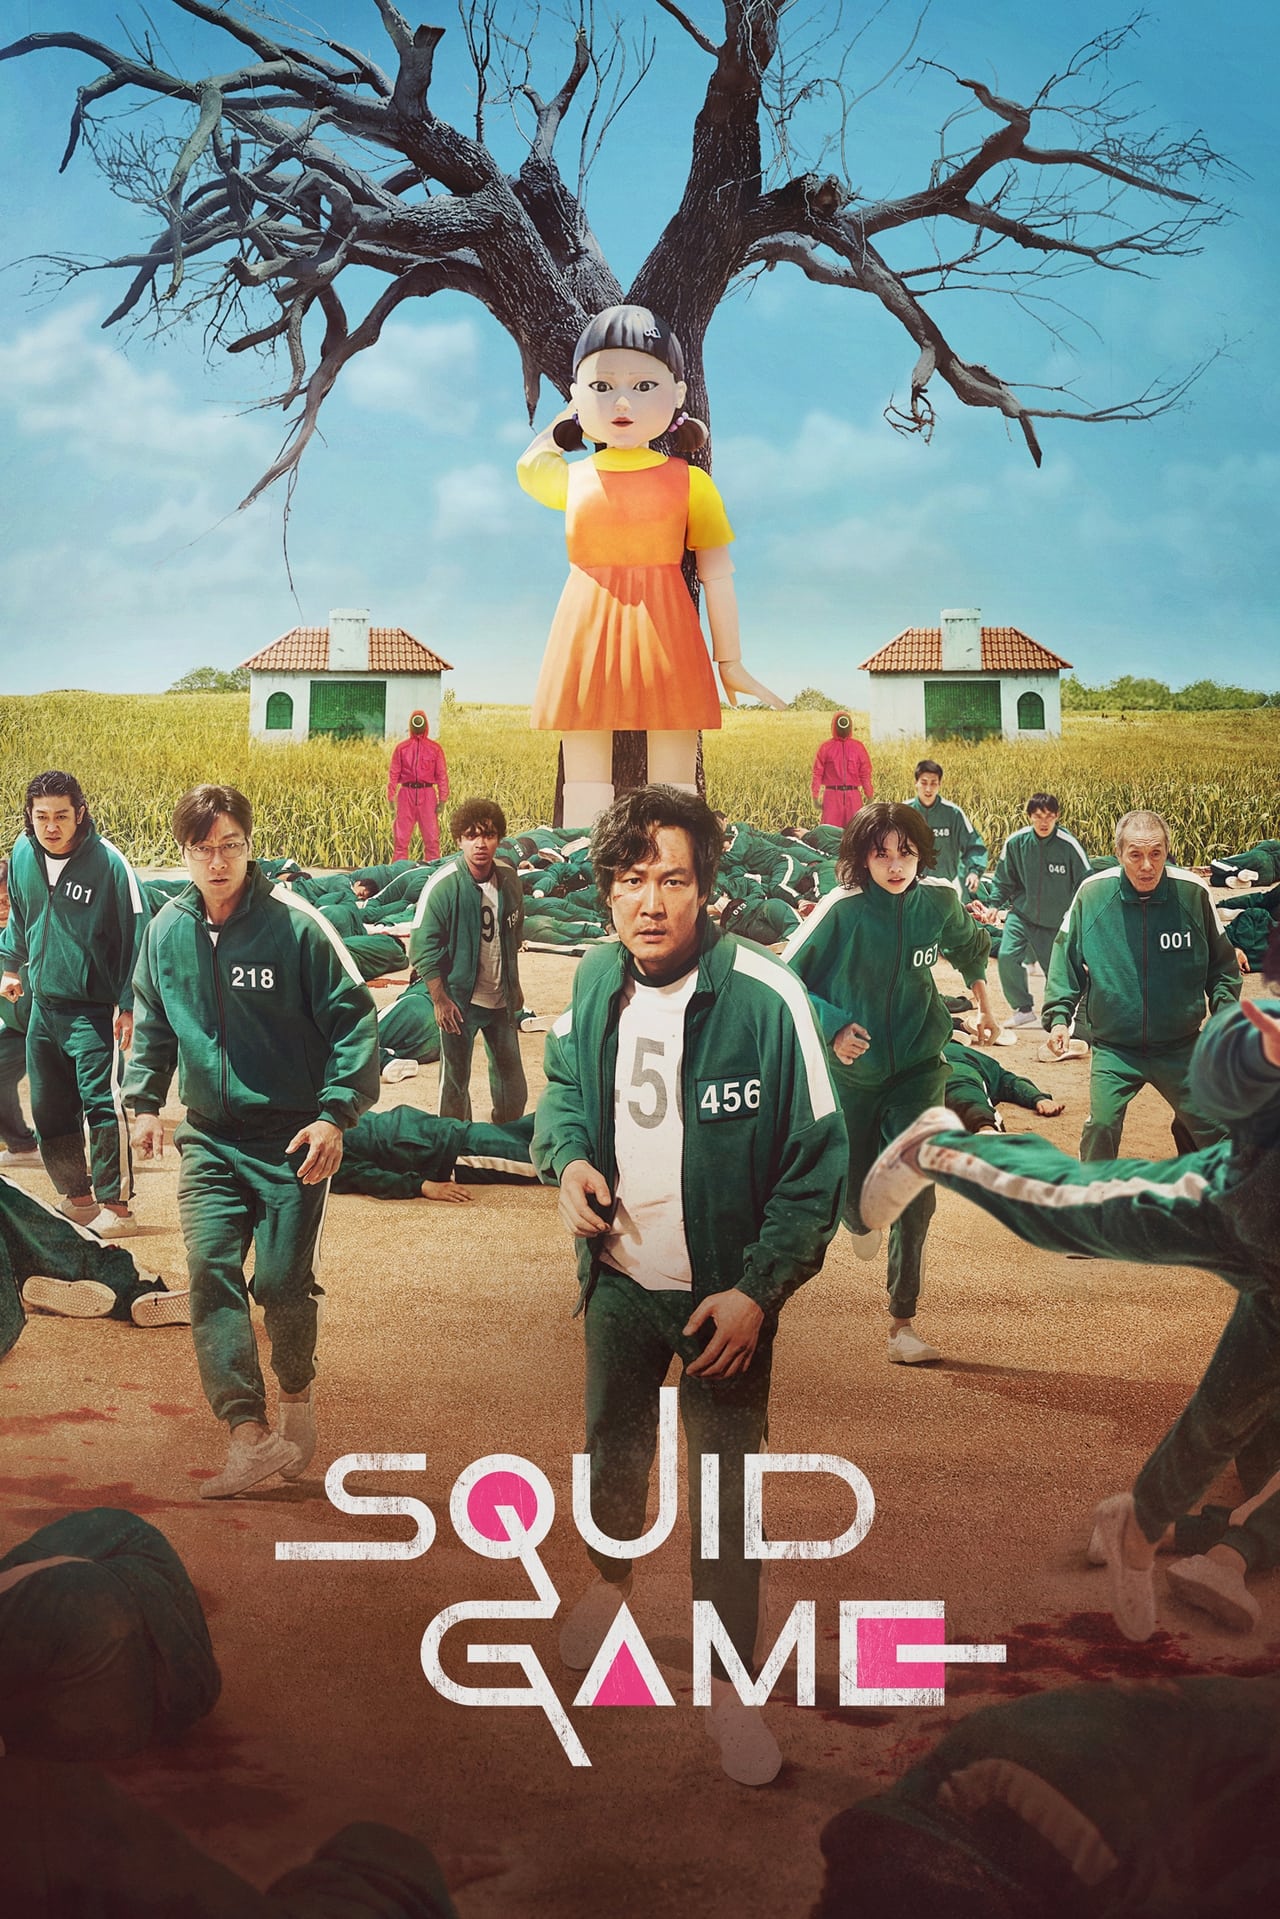 Squid Game (season 1)